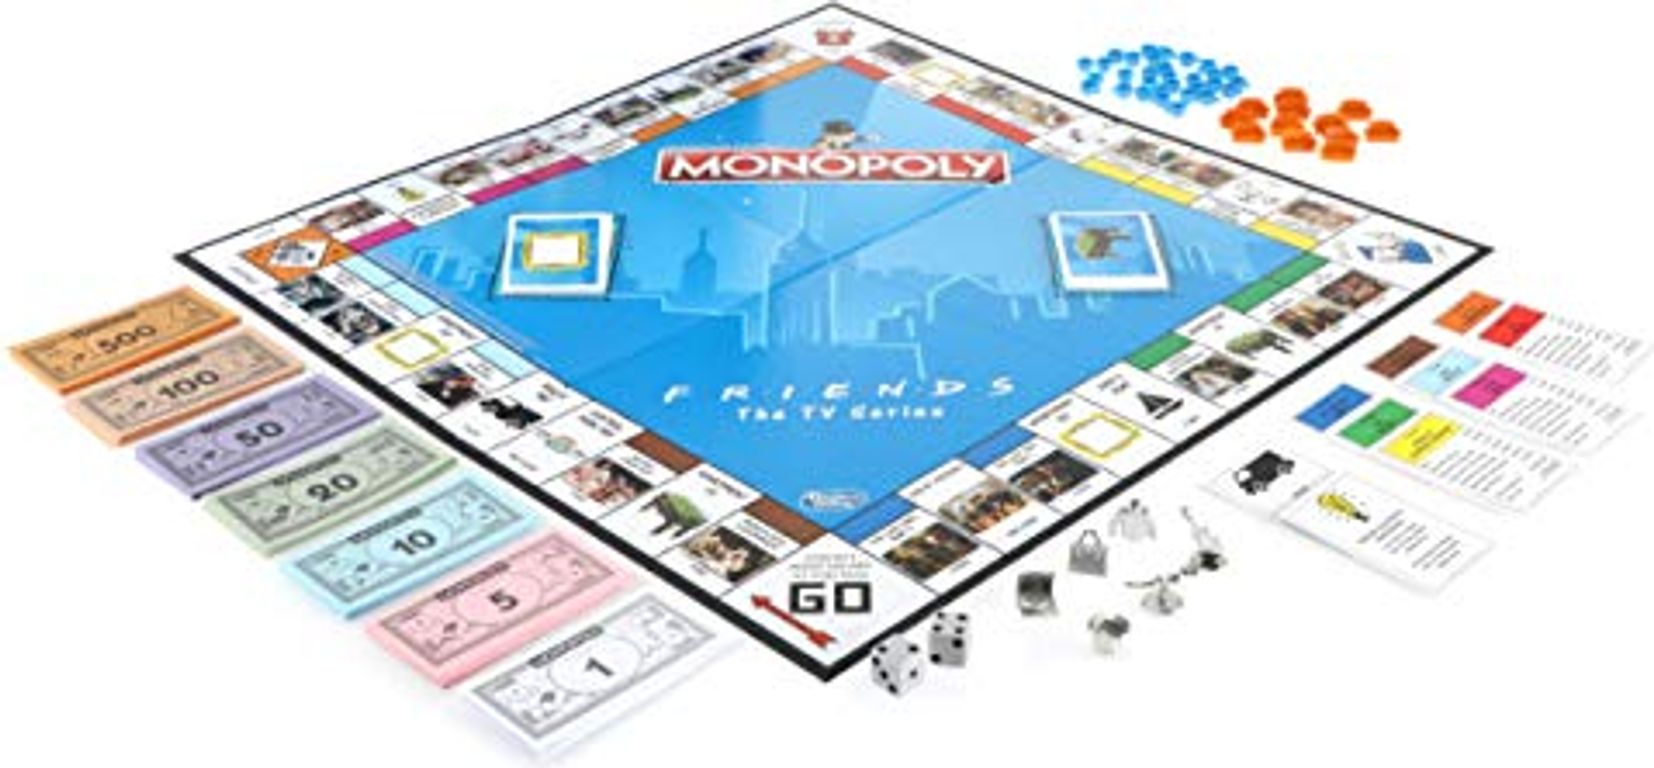 Monopoly: Friends The TV Series komponenten